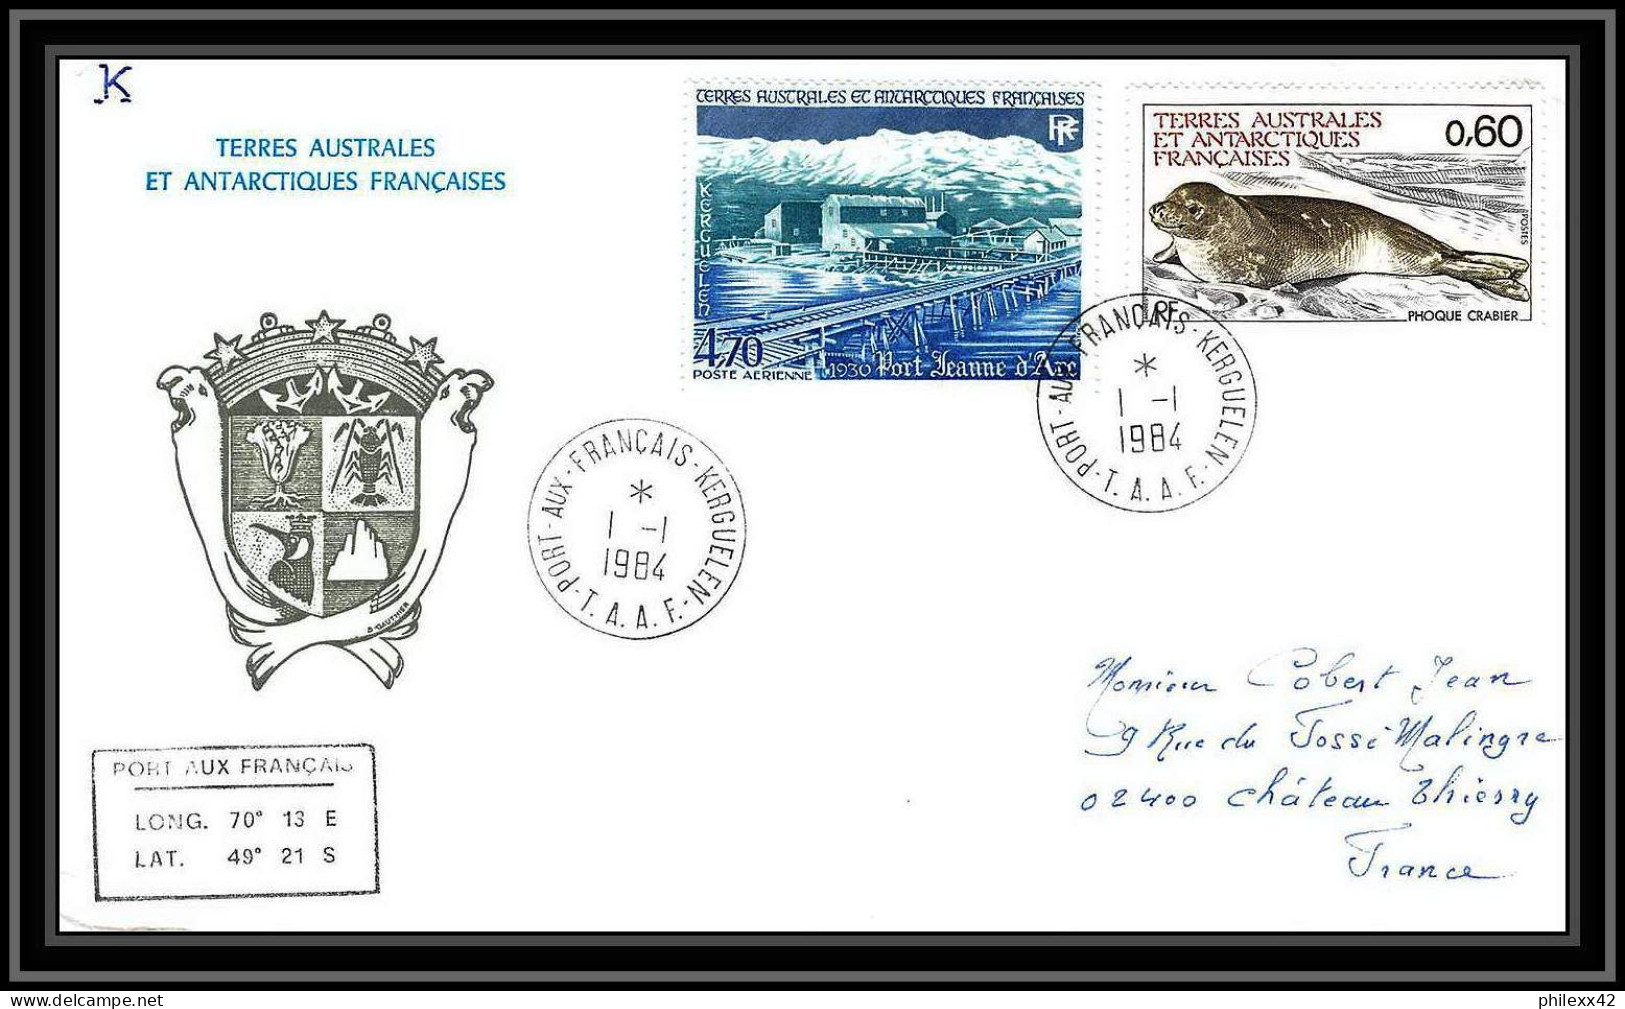 0208 Taaf Terres Australes Antarctic Lettre (cover) 01/01/1984 PA 80 PONT JEANNE D ARC - Briefe U. Dokumente